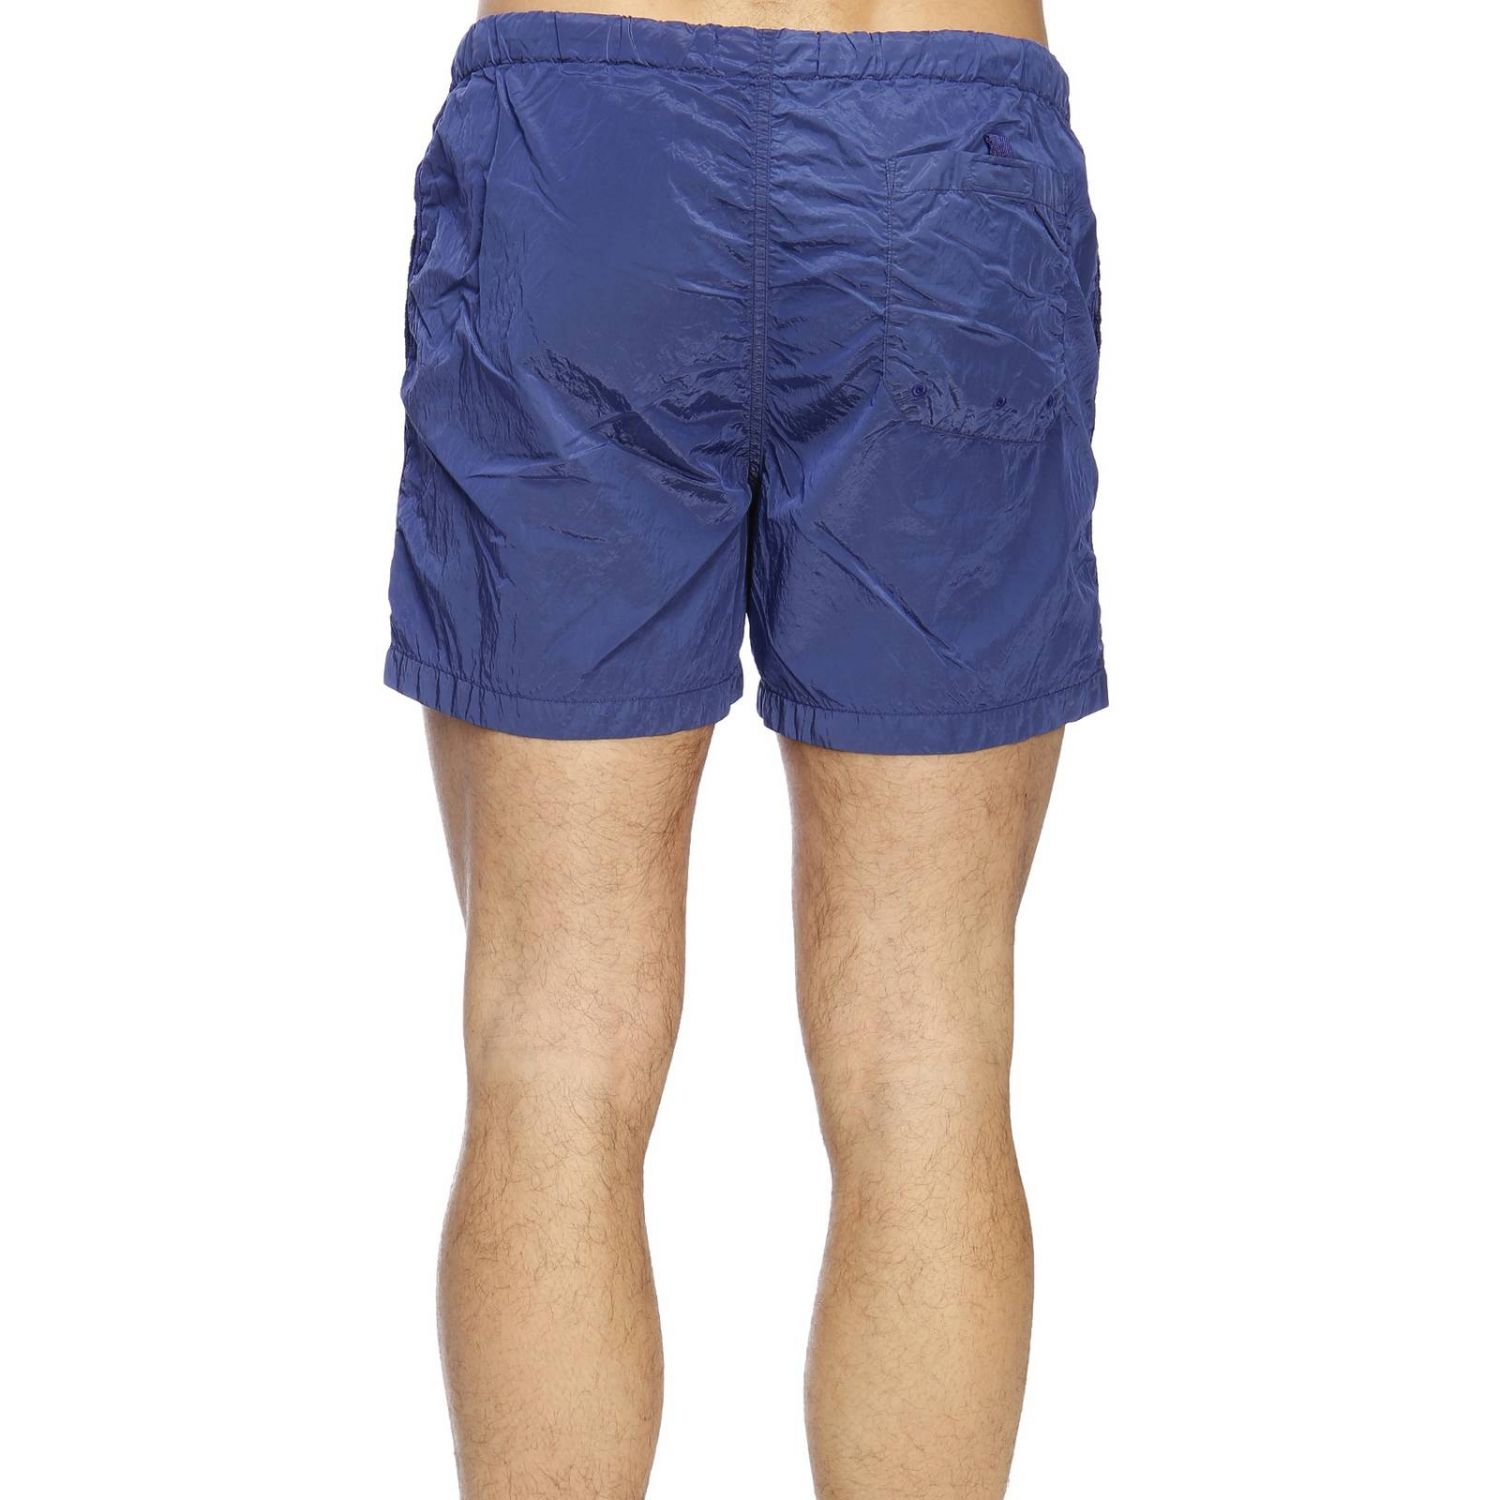 Stone Island Outlet: Bermuda shorts men | Short Stone Island Men ...